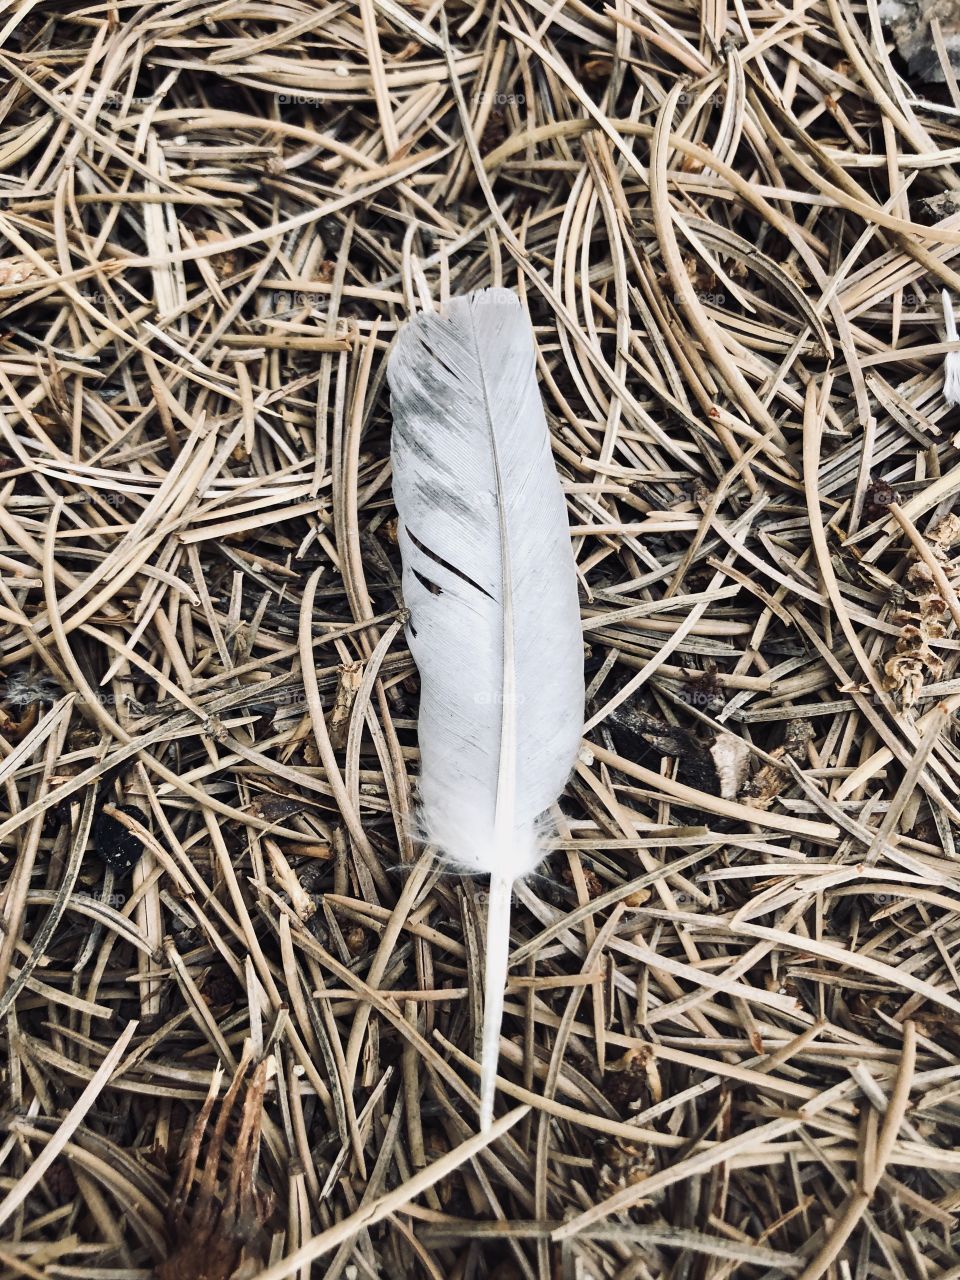 Fallen feather